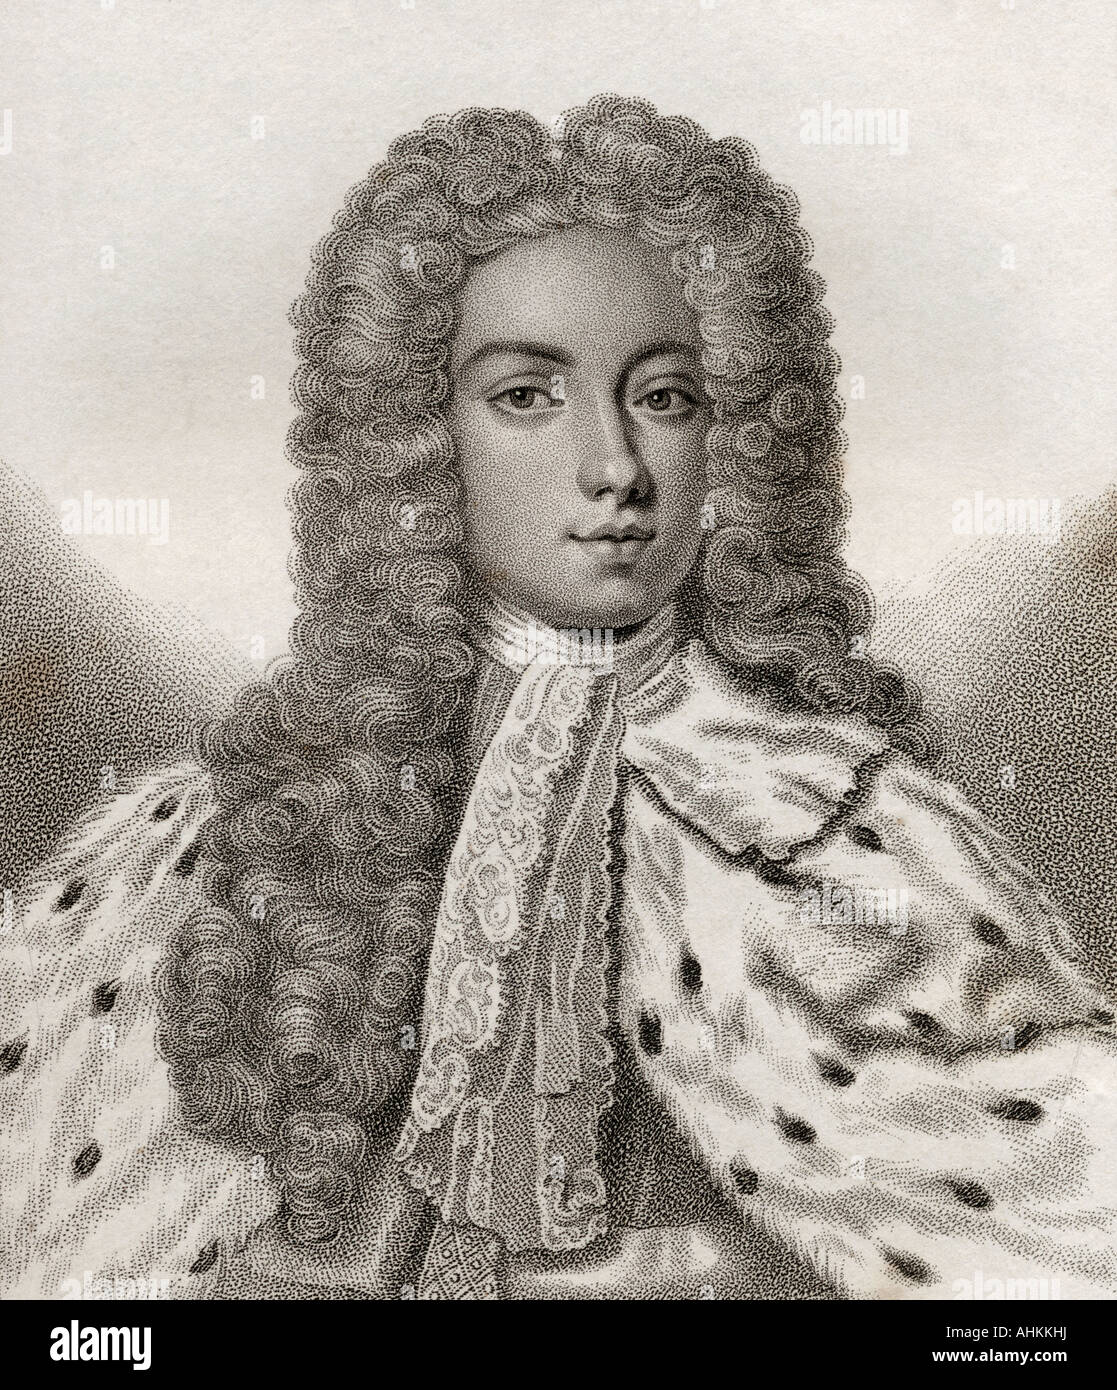 Baptist Noel, 4th Earl of Gainsborough, 1708 - 1750. English peer and Member of Parliament Stock Photo